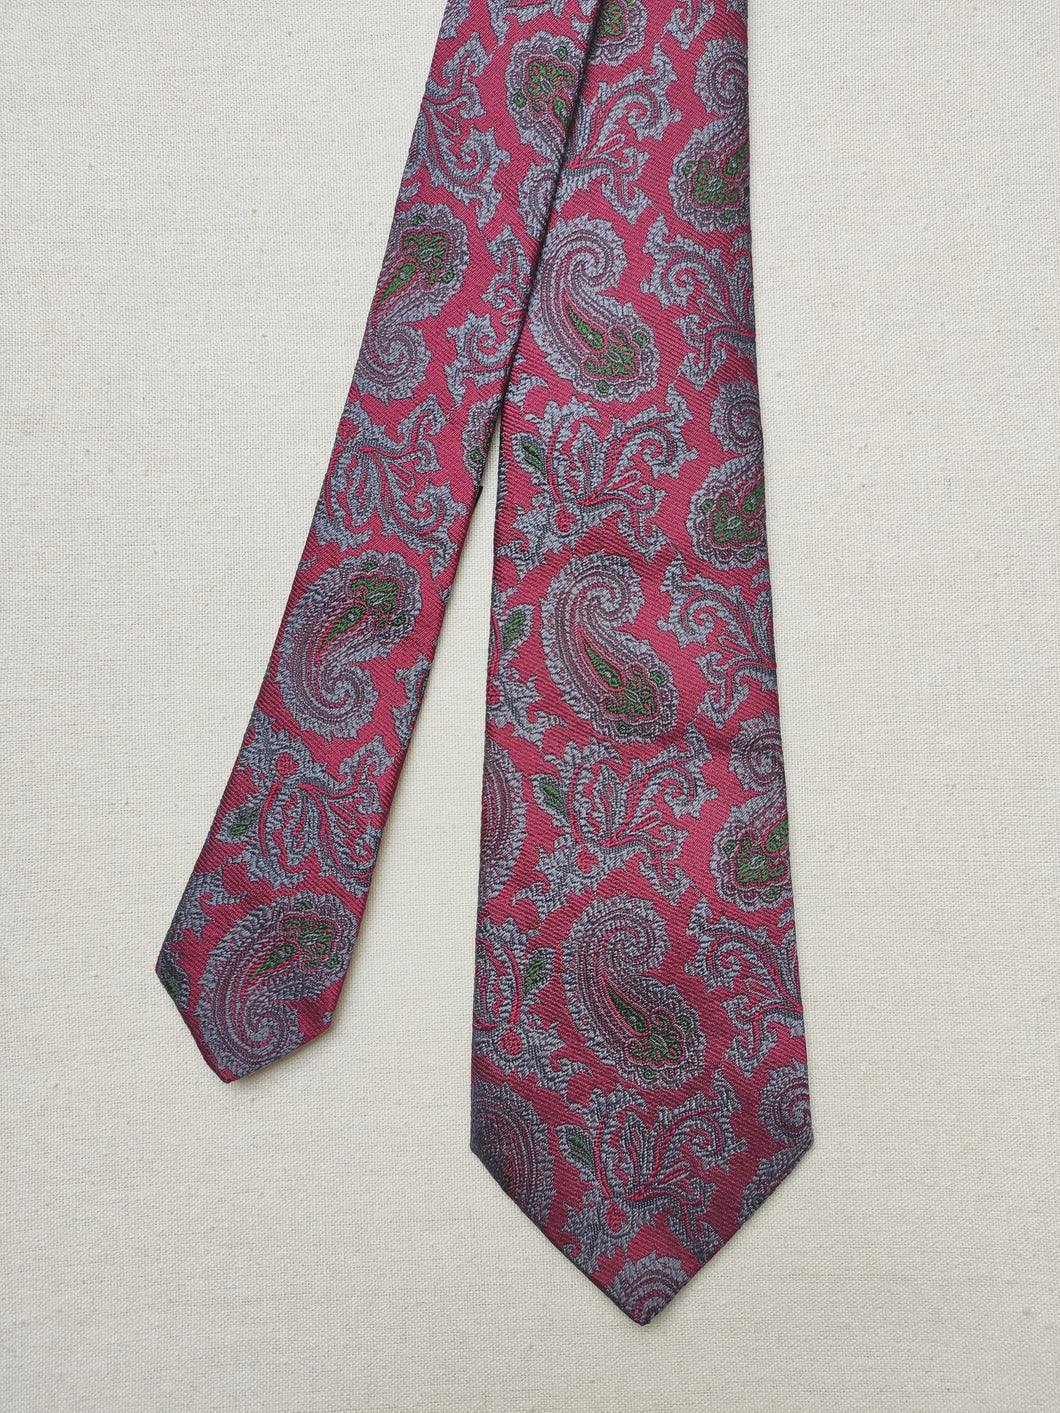 Caleffi Roma X Vivax London cravate paisley soie jacquard Made in England